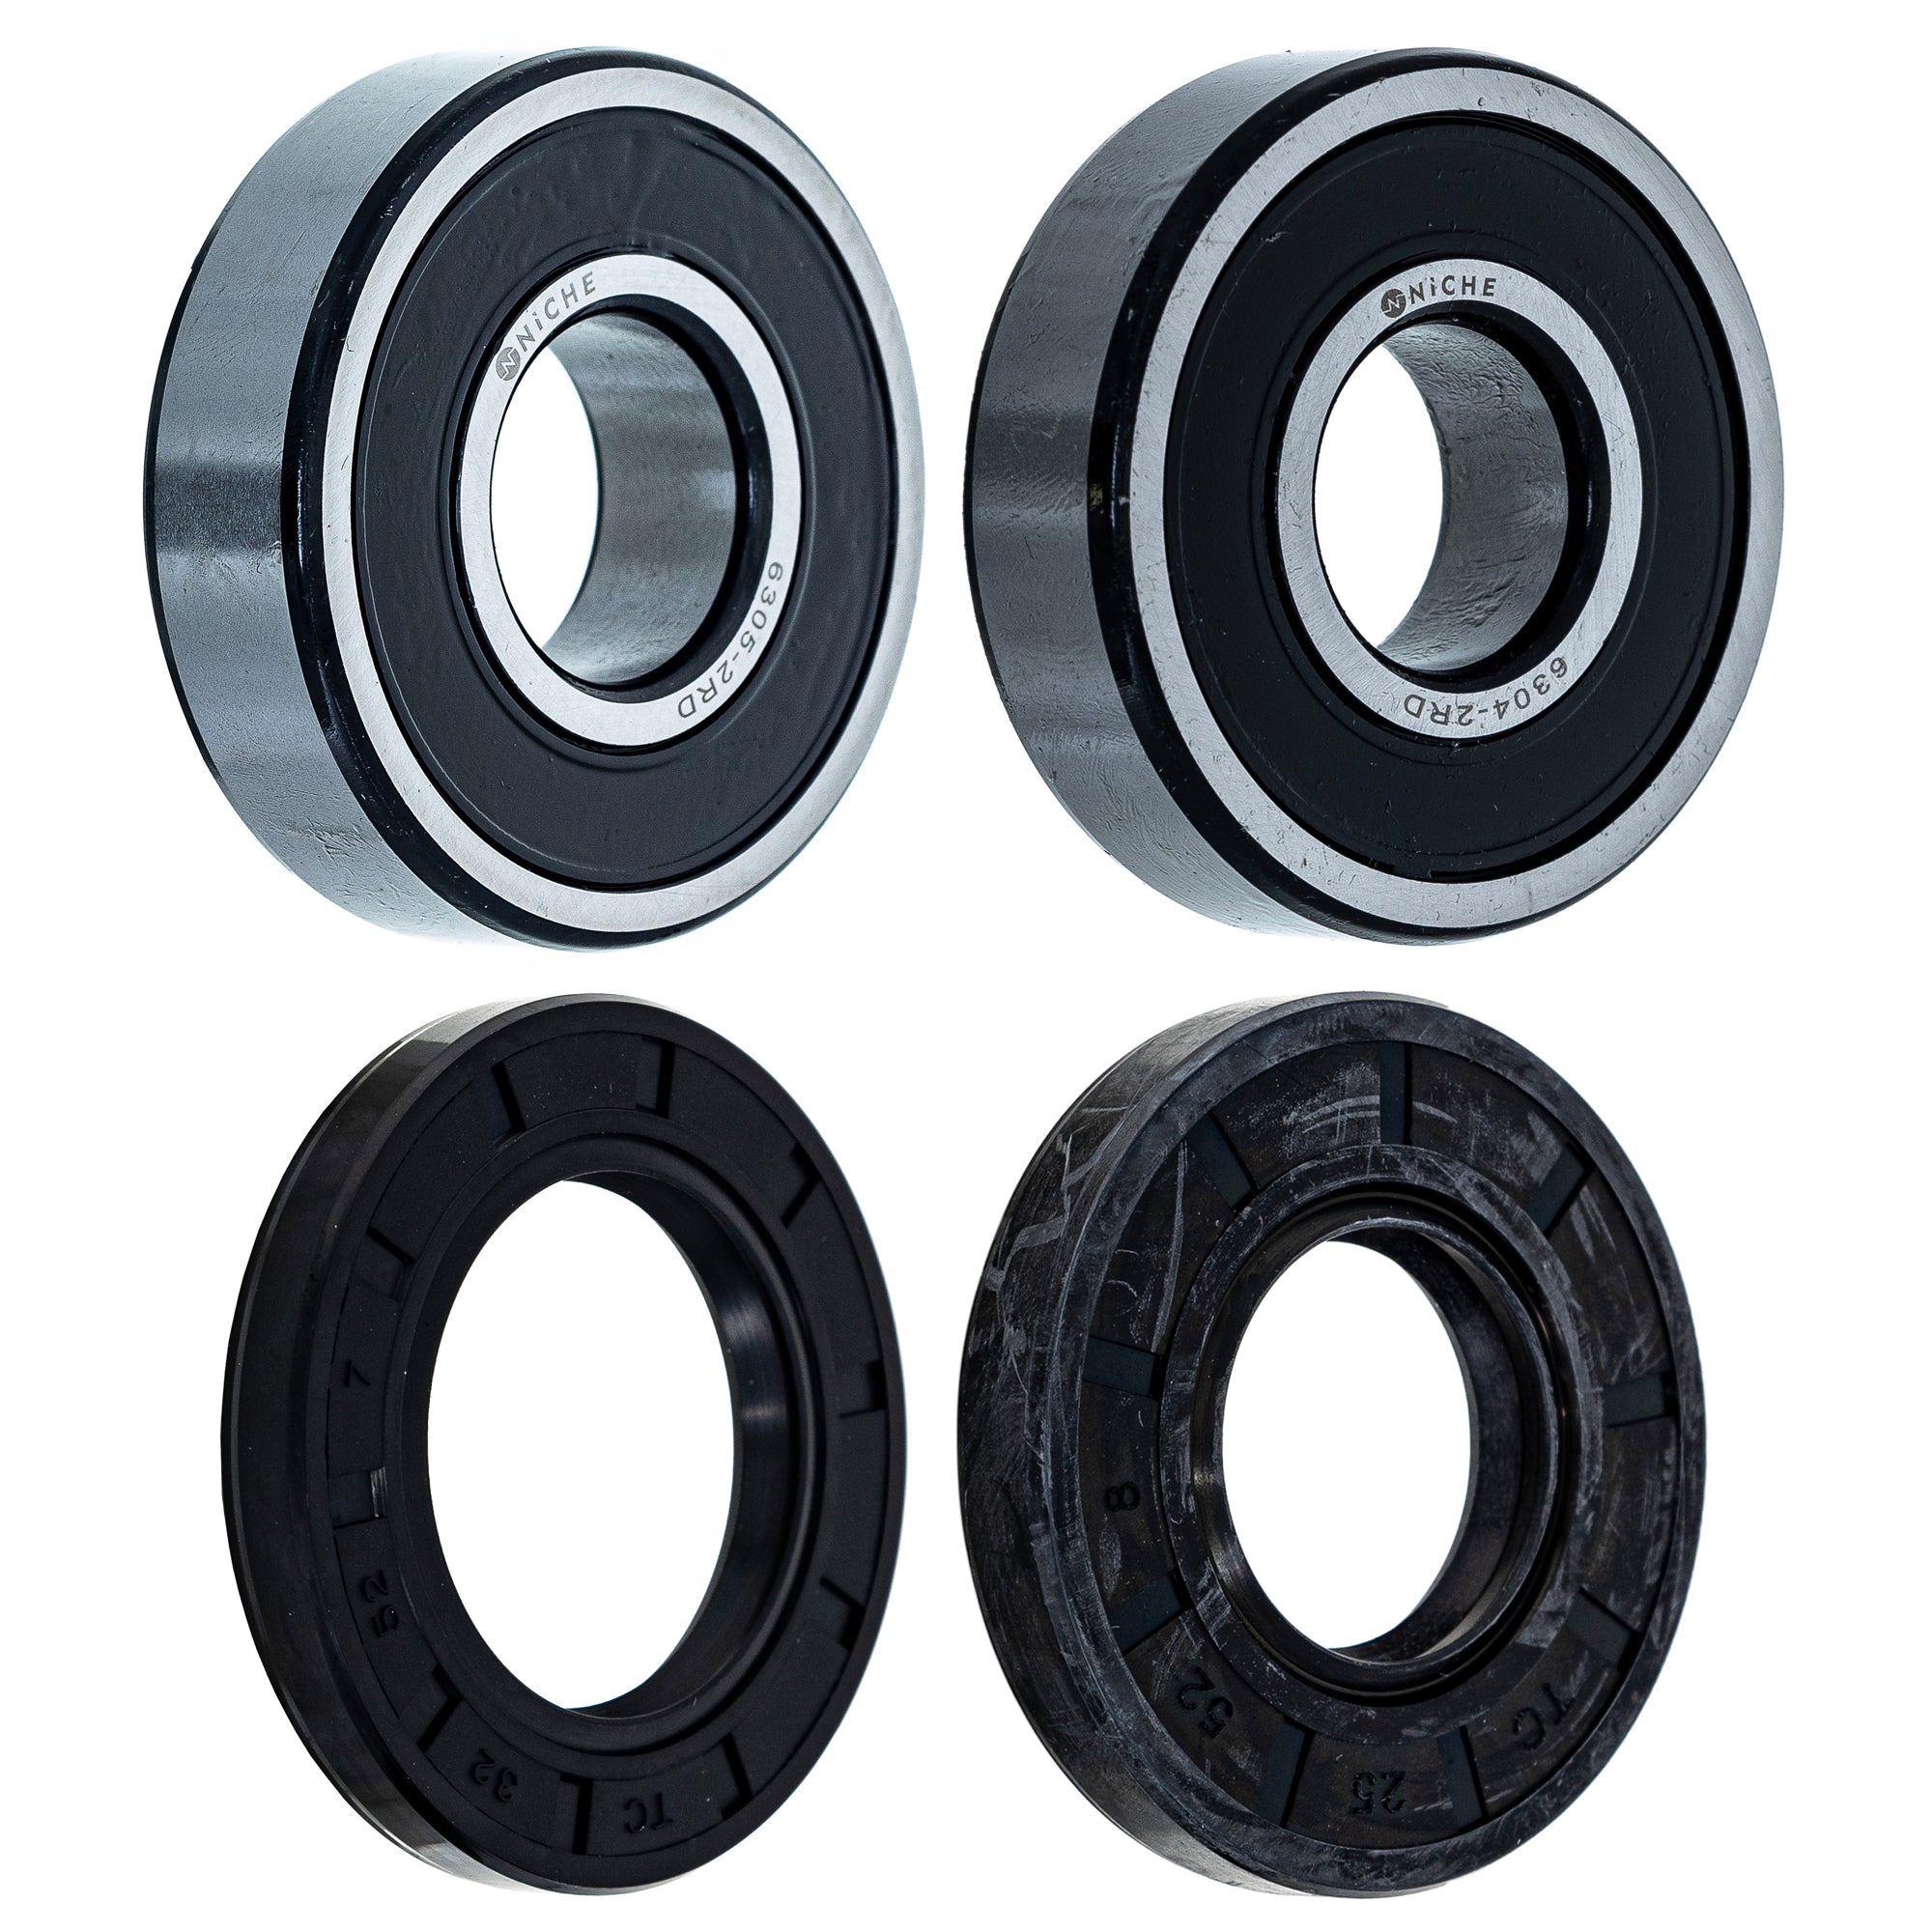 Wheel Bearing Seal Kit for zOTHER TX500 NICHE MK1008915